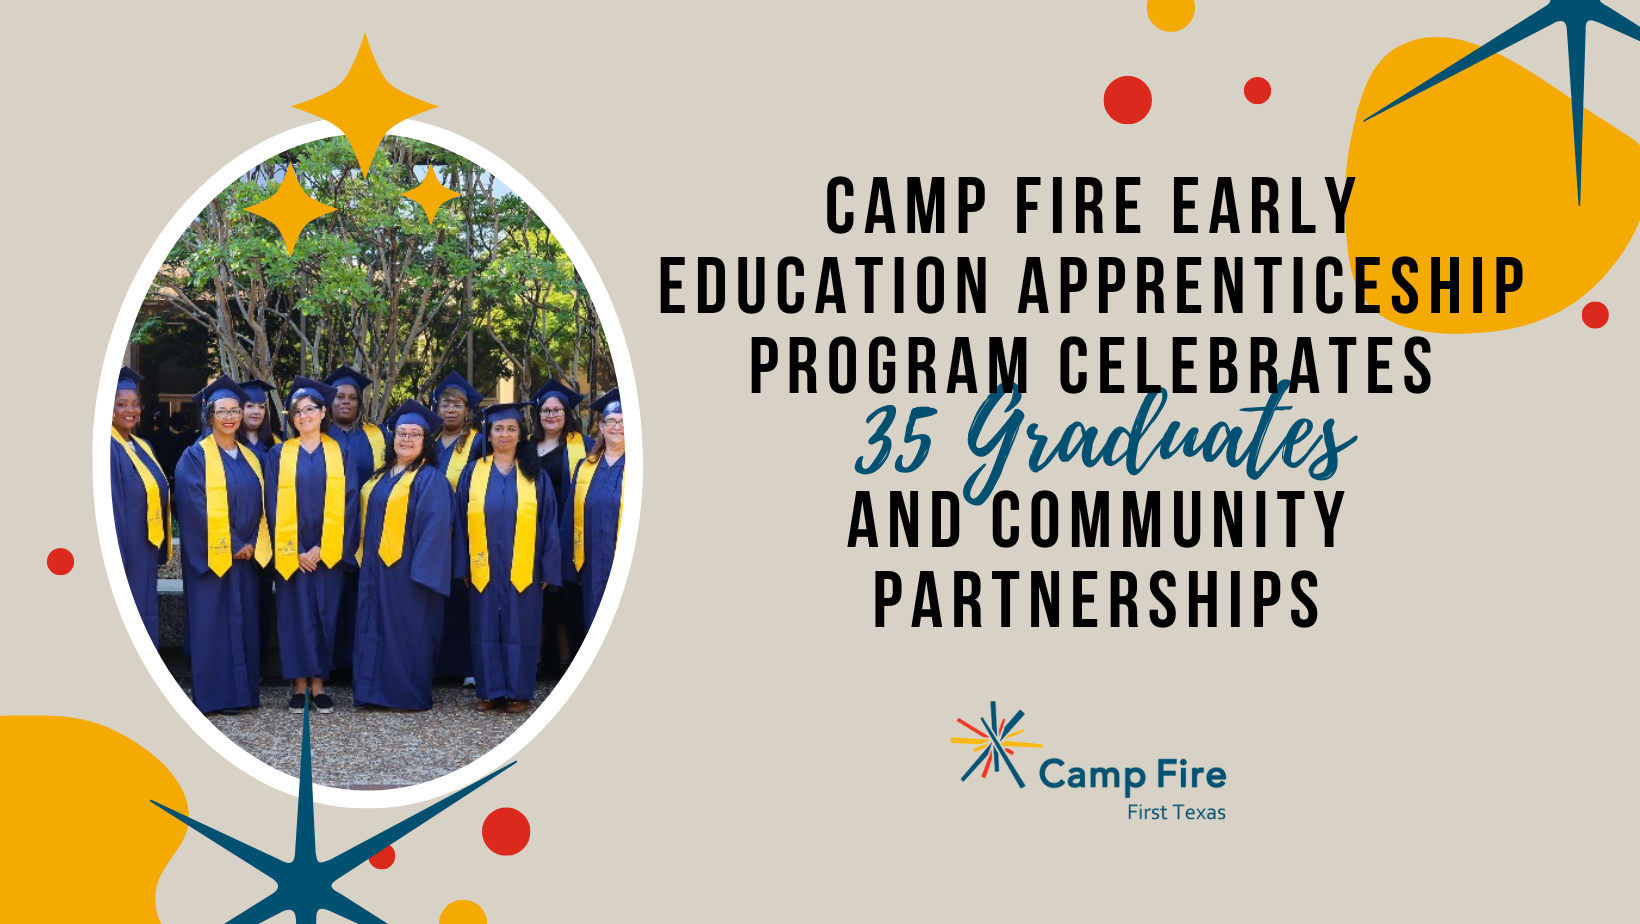 Camp Fire Early Education Apprenticeship Program Celebrates 35 Graduates and Community Partnerships